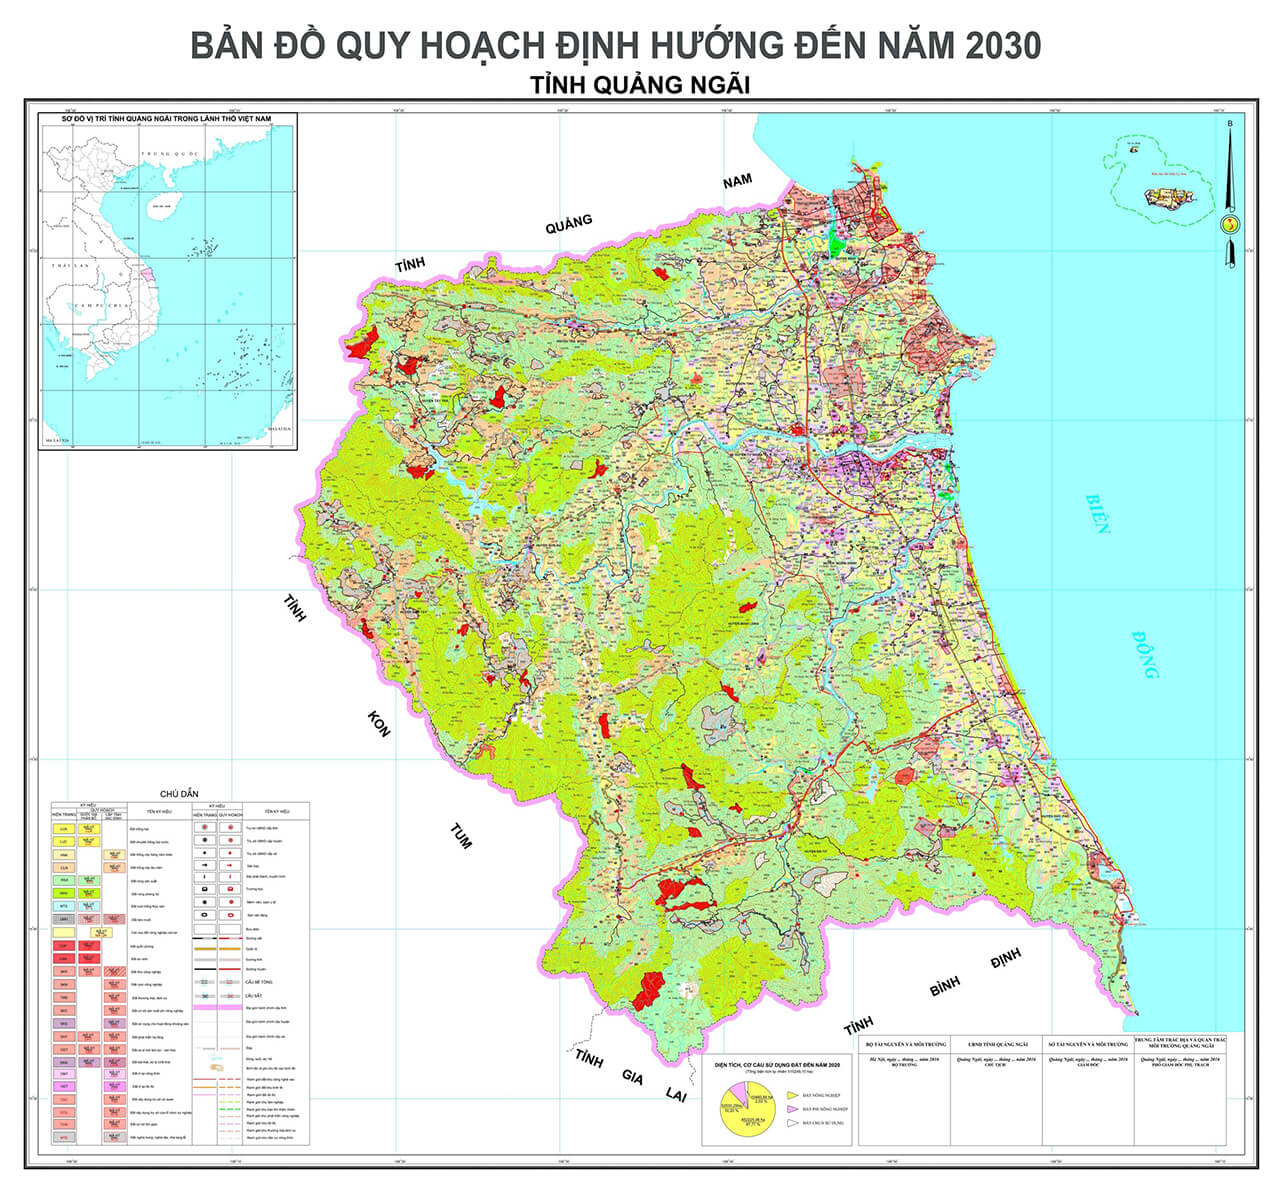 ban-do-quy-hoach-huyen-mo-duc-tinh-quang-ngai-den-nam-2030